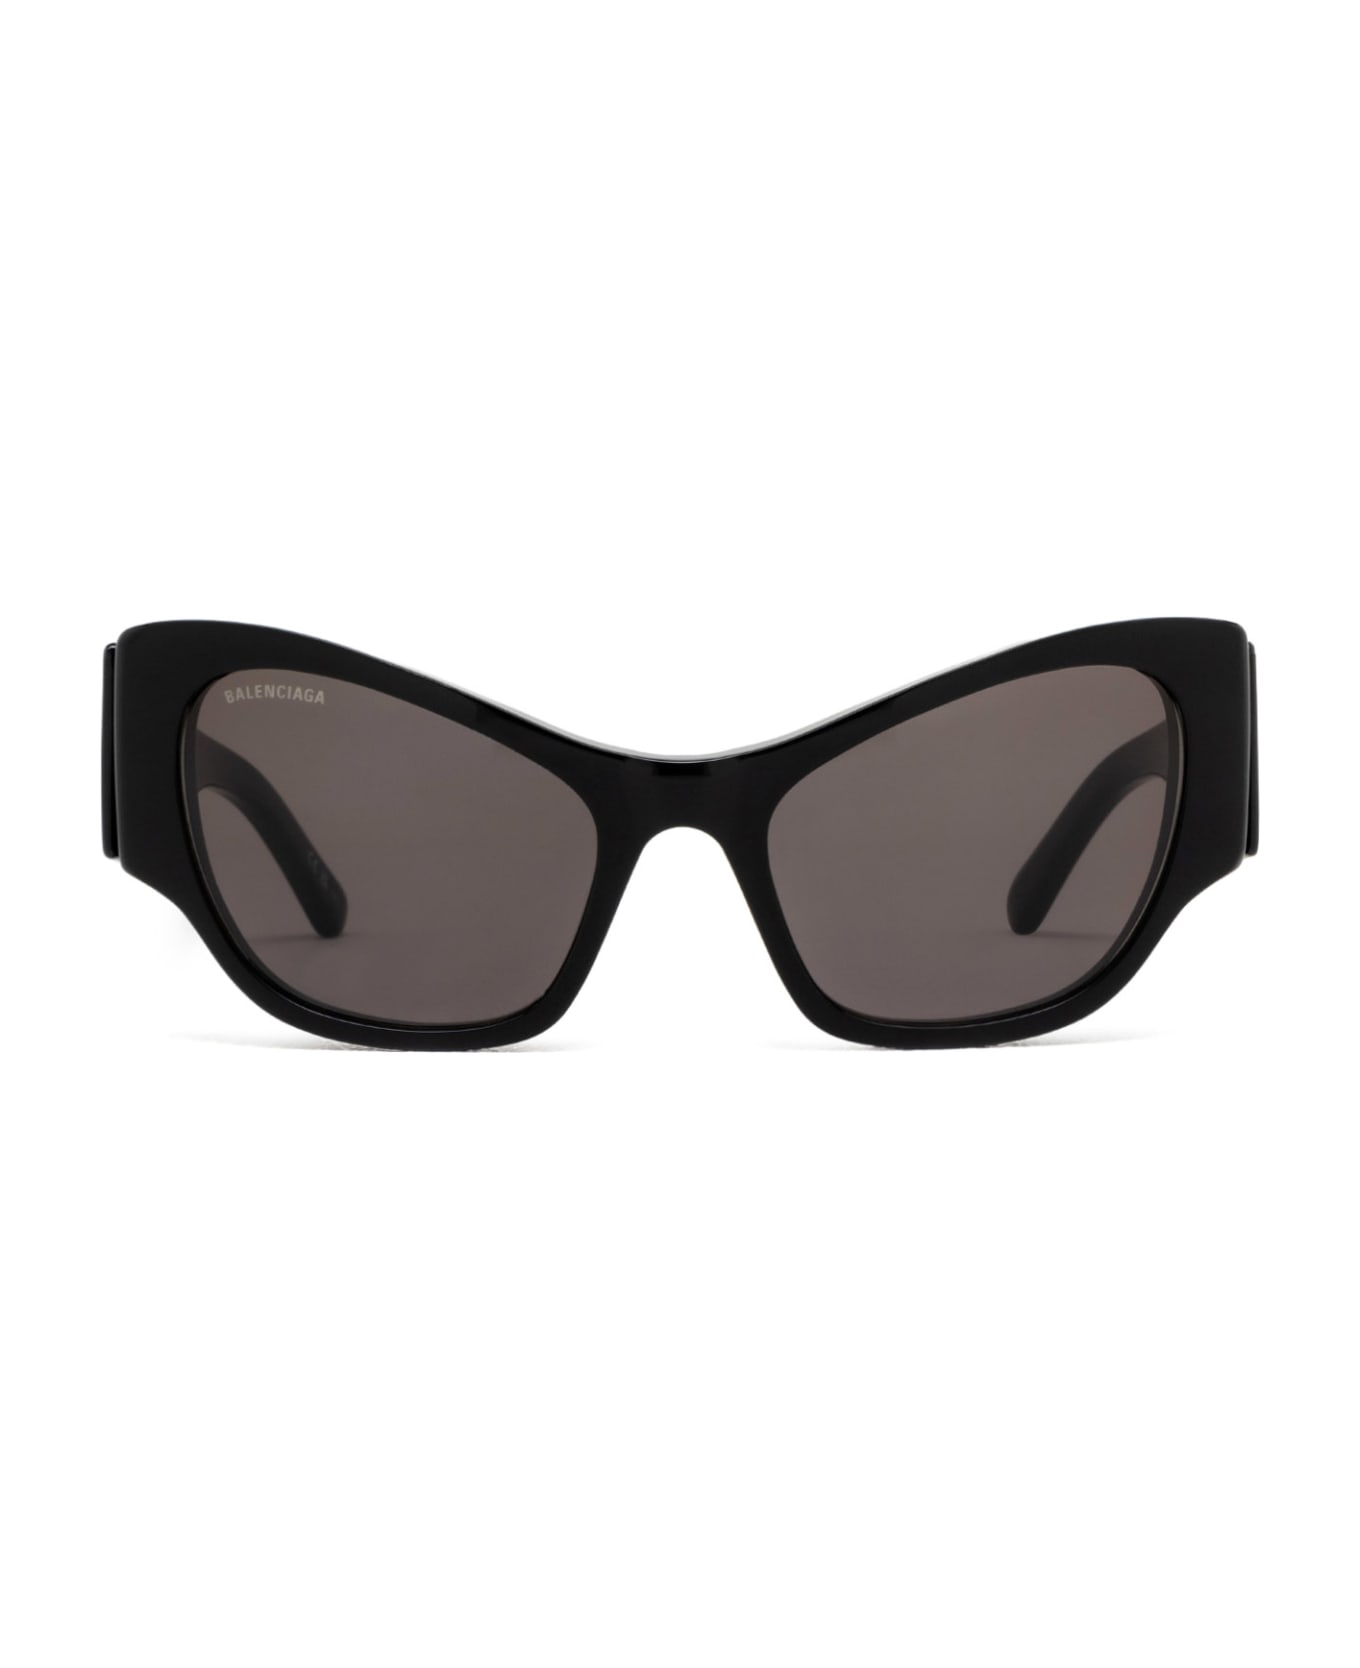 Balenciaga Eyewear Bb0259s Black Sunglasses - Black